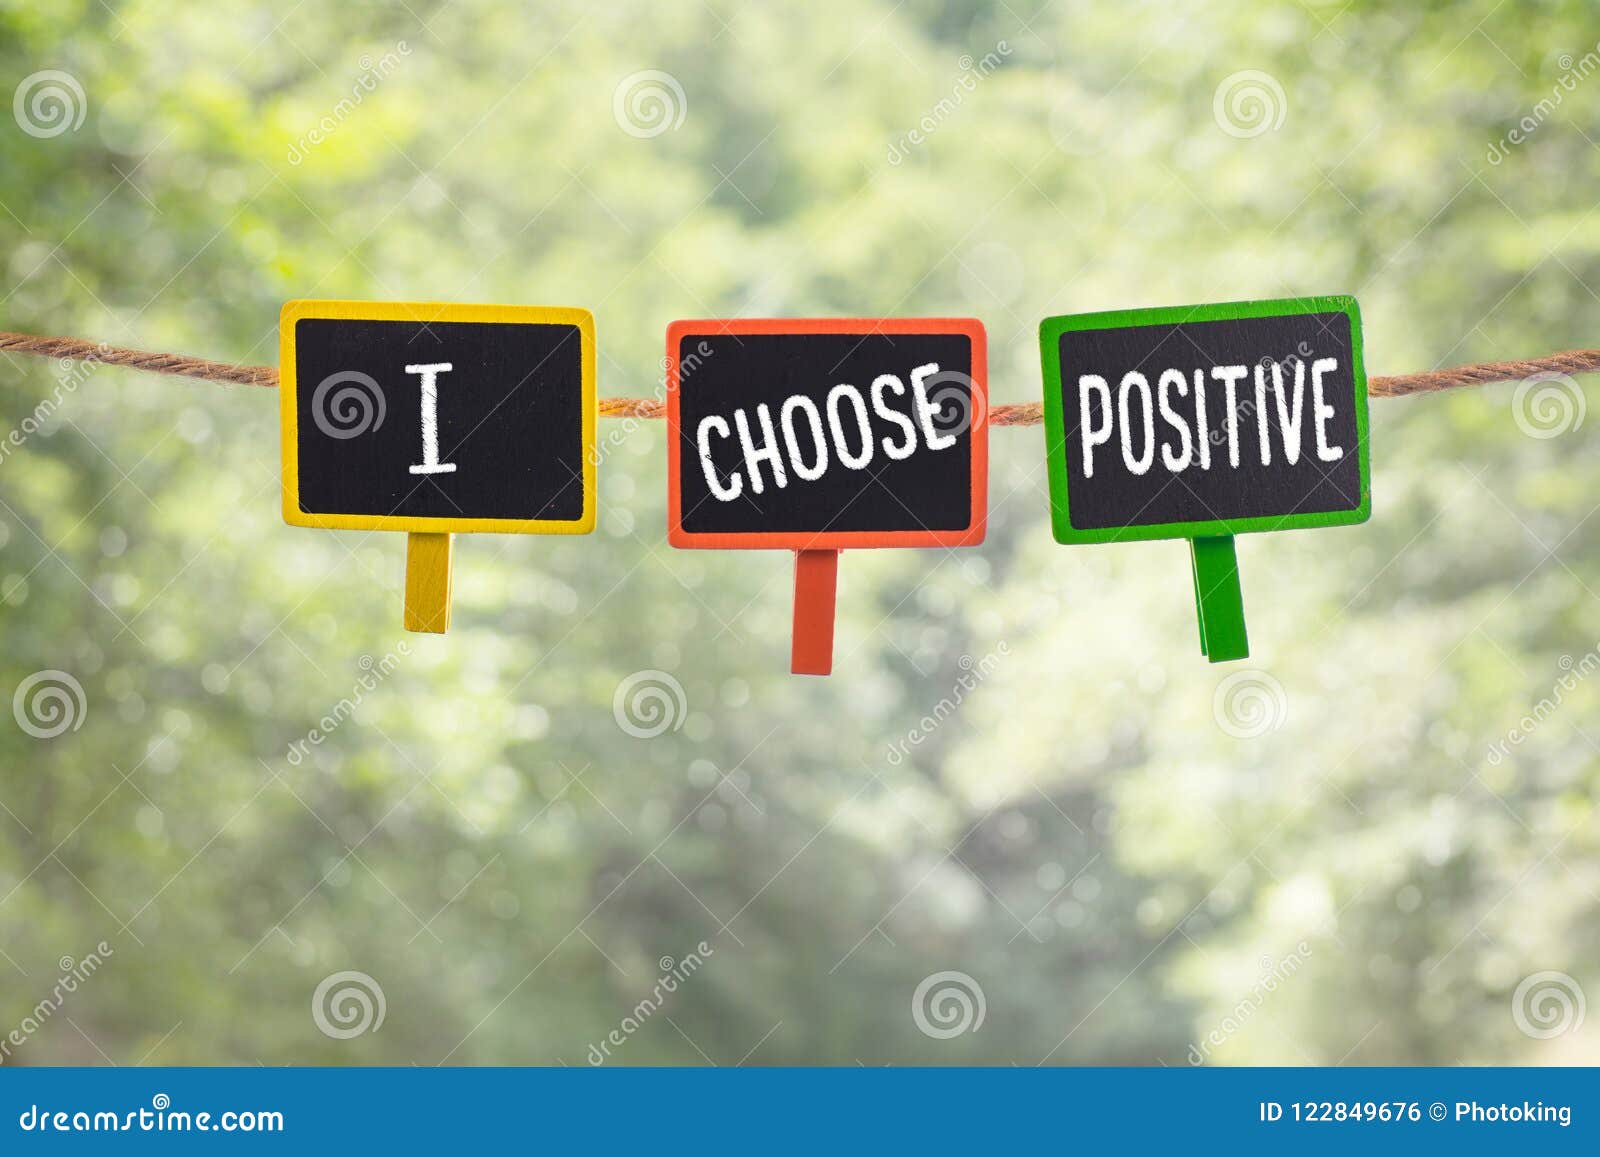 i choose positive on board